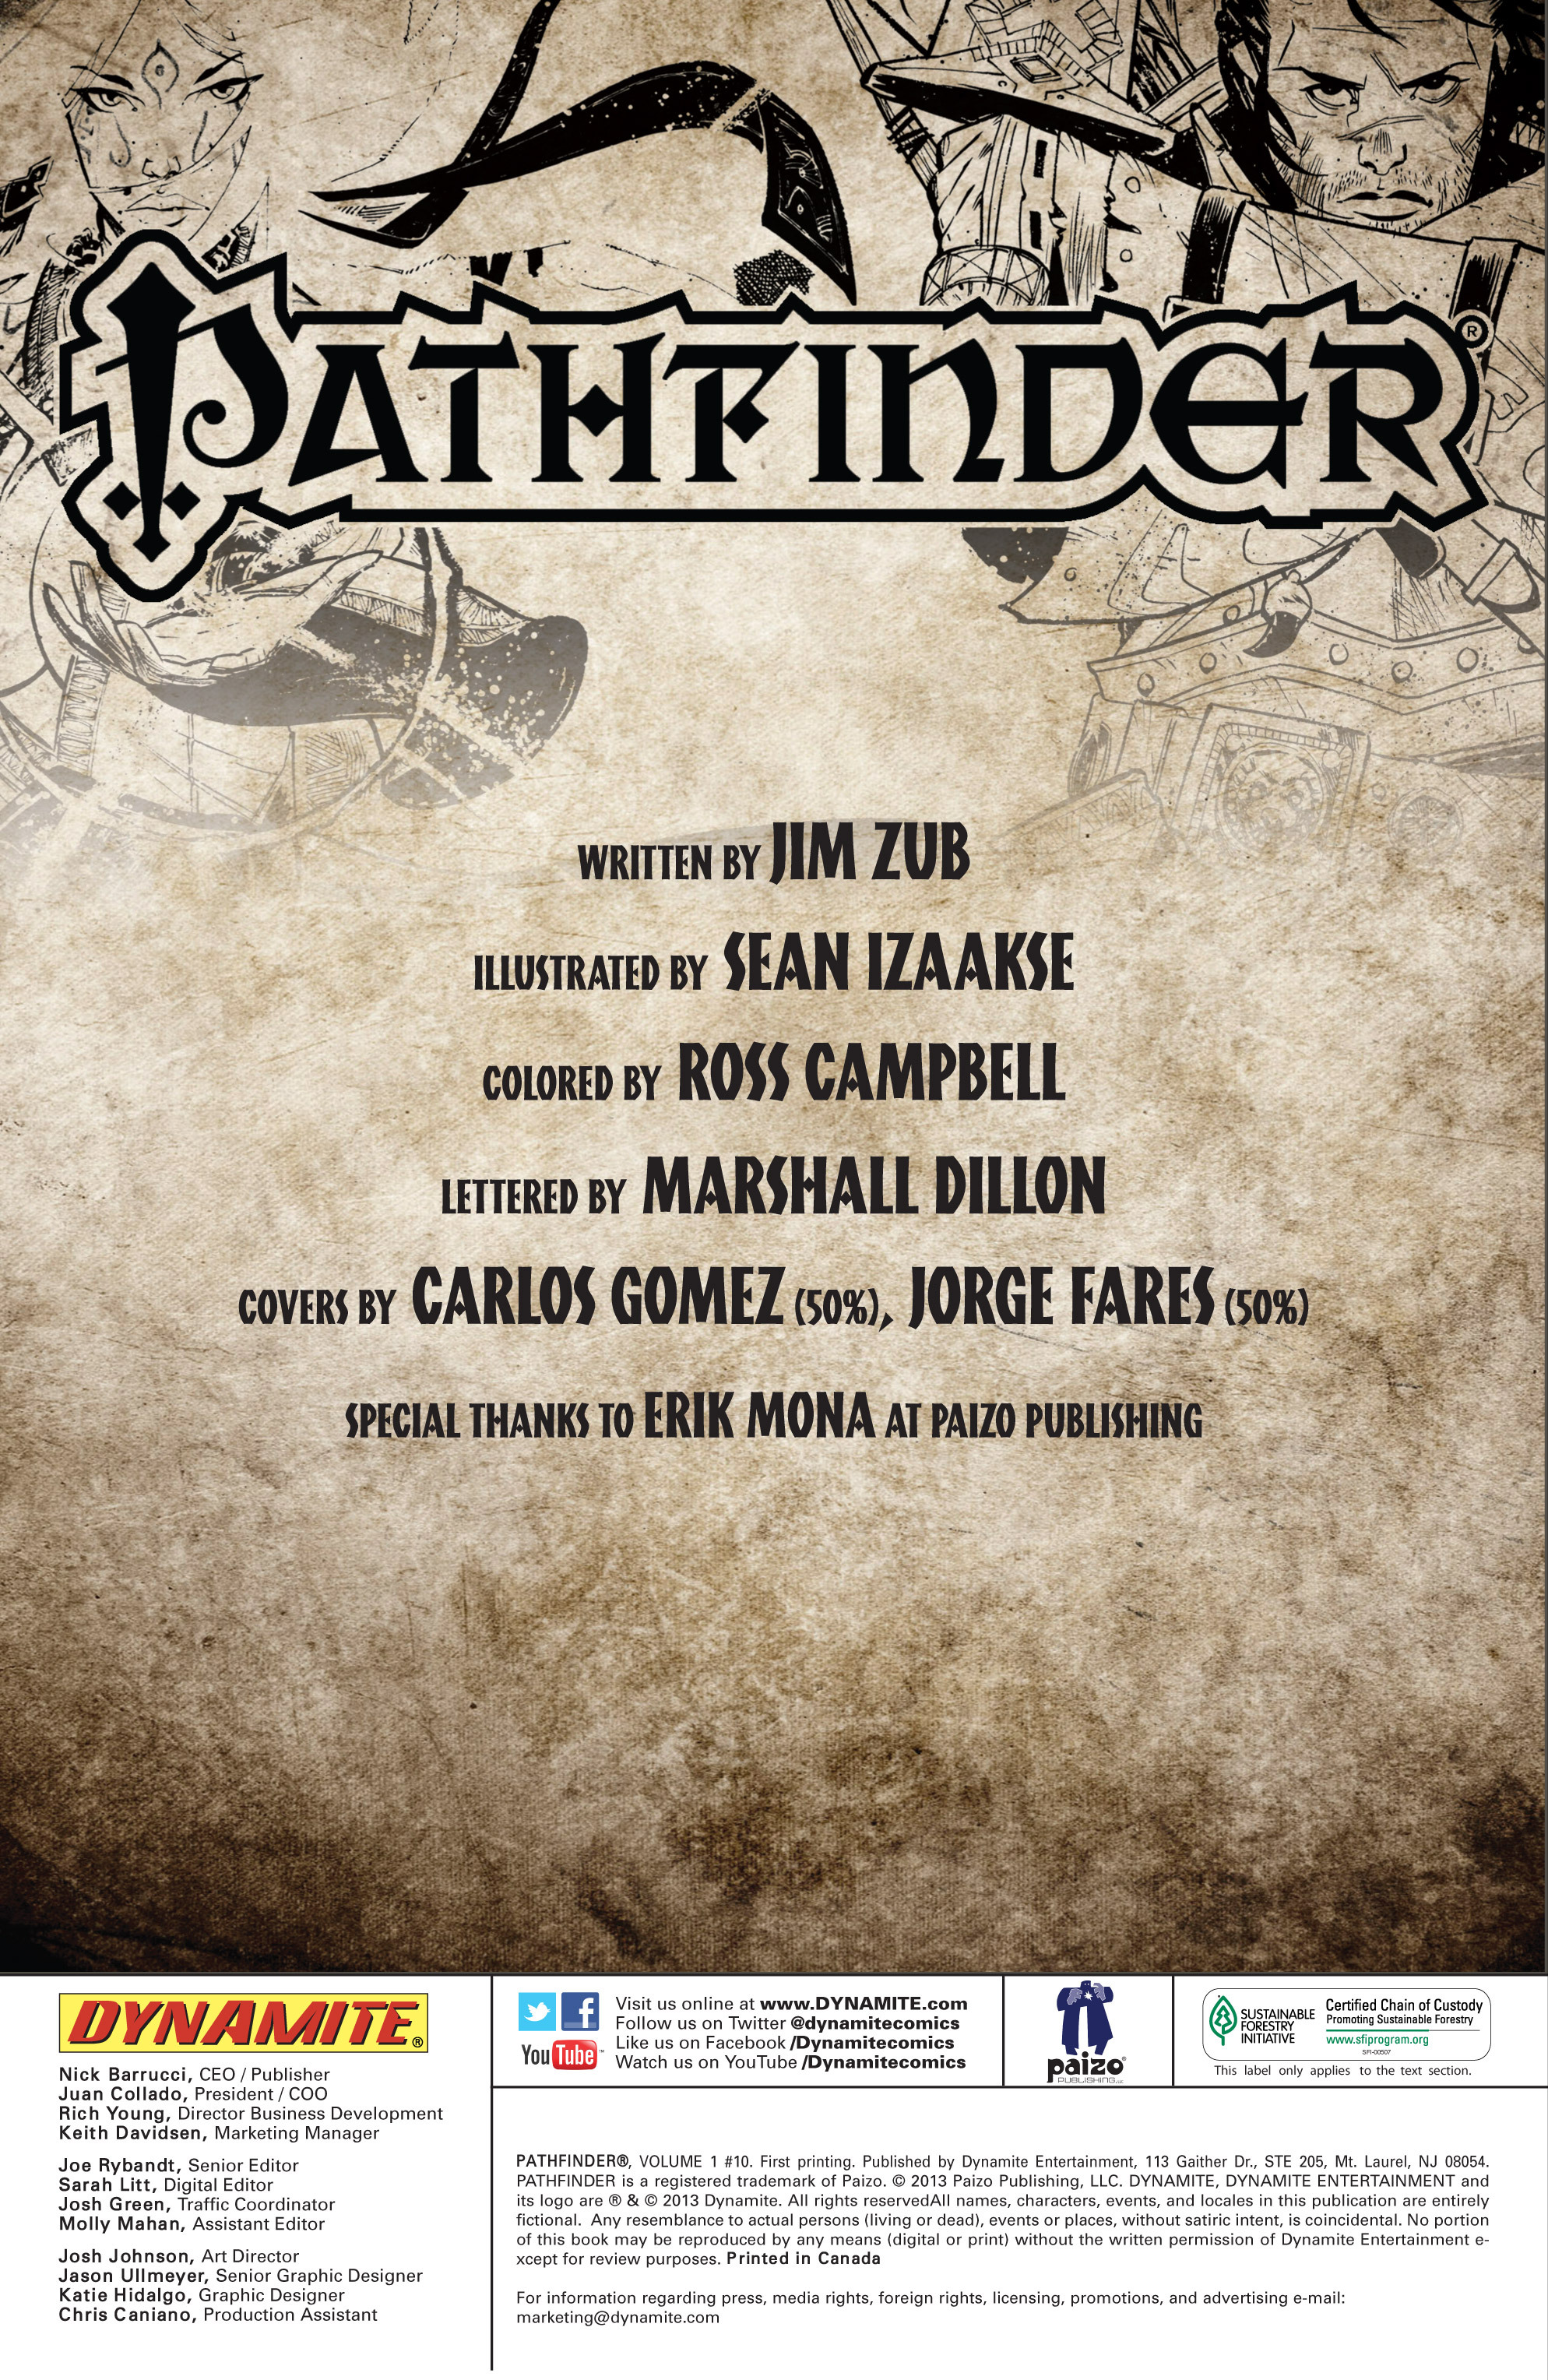 Read online Pathfinder comic -  Issue #10 - 3